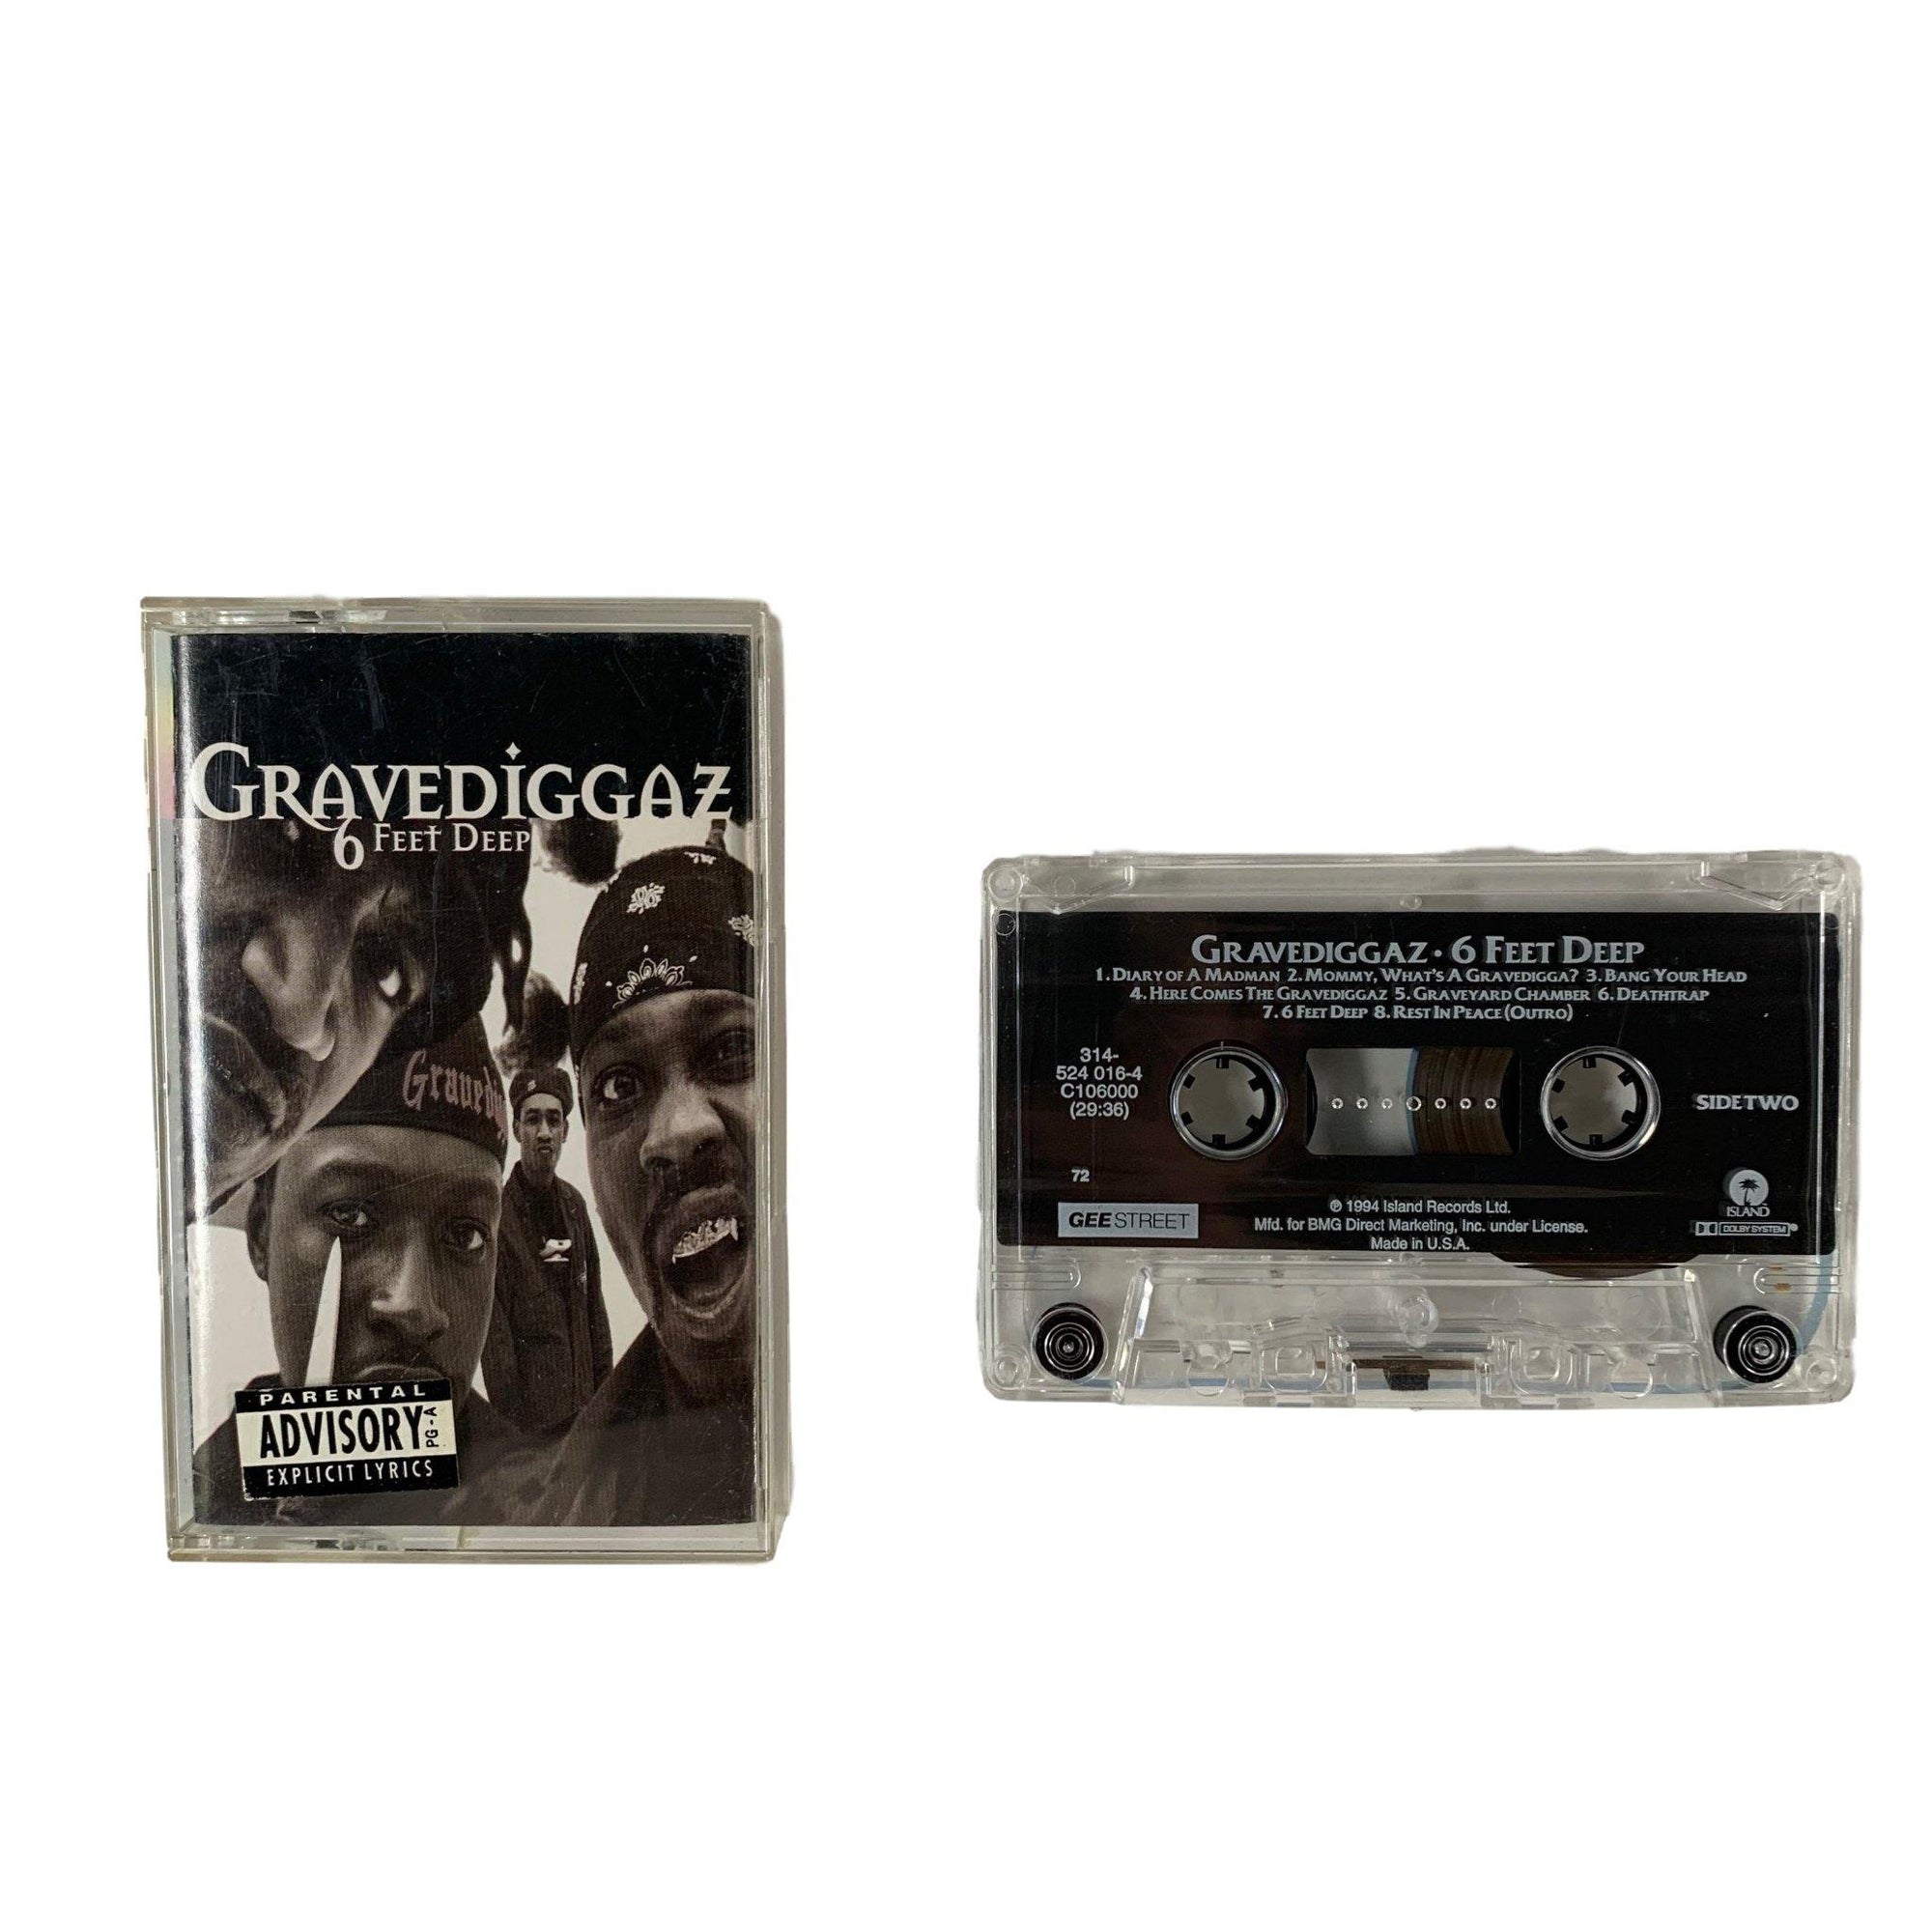 Vintage Gravediggaz "6 Feet Deep" Gee Street Records Tape - jointcustodydc